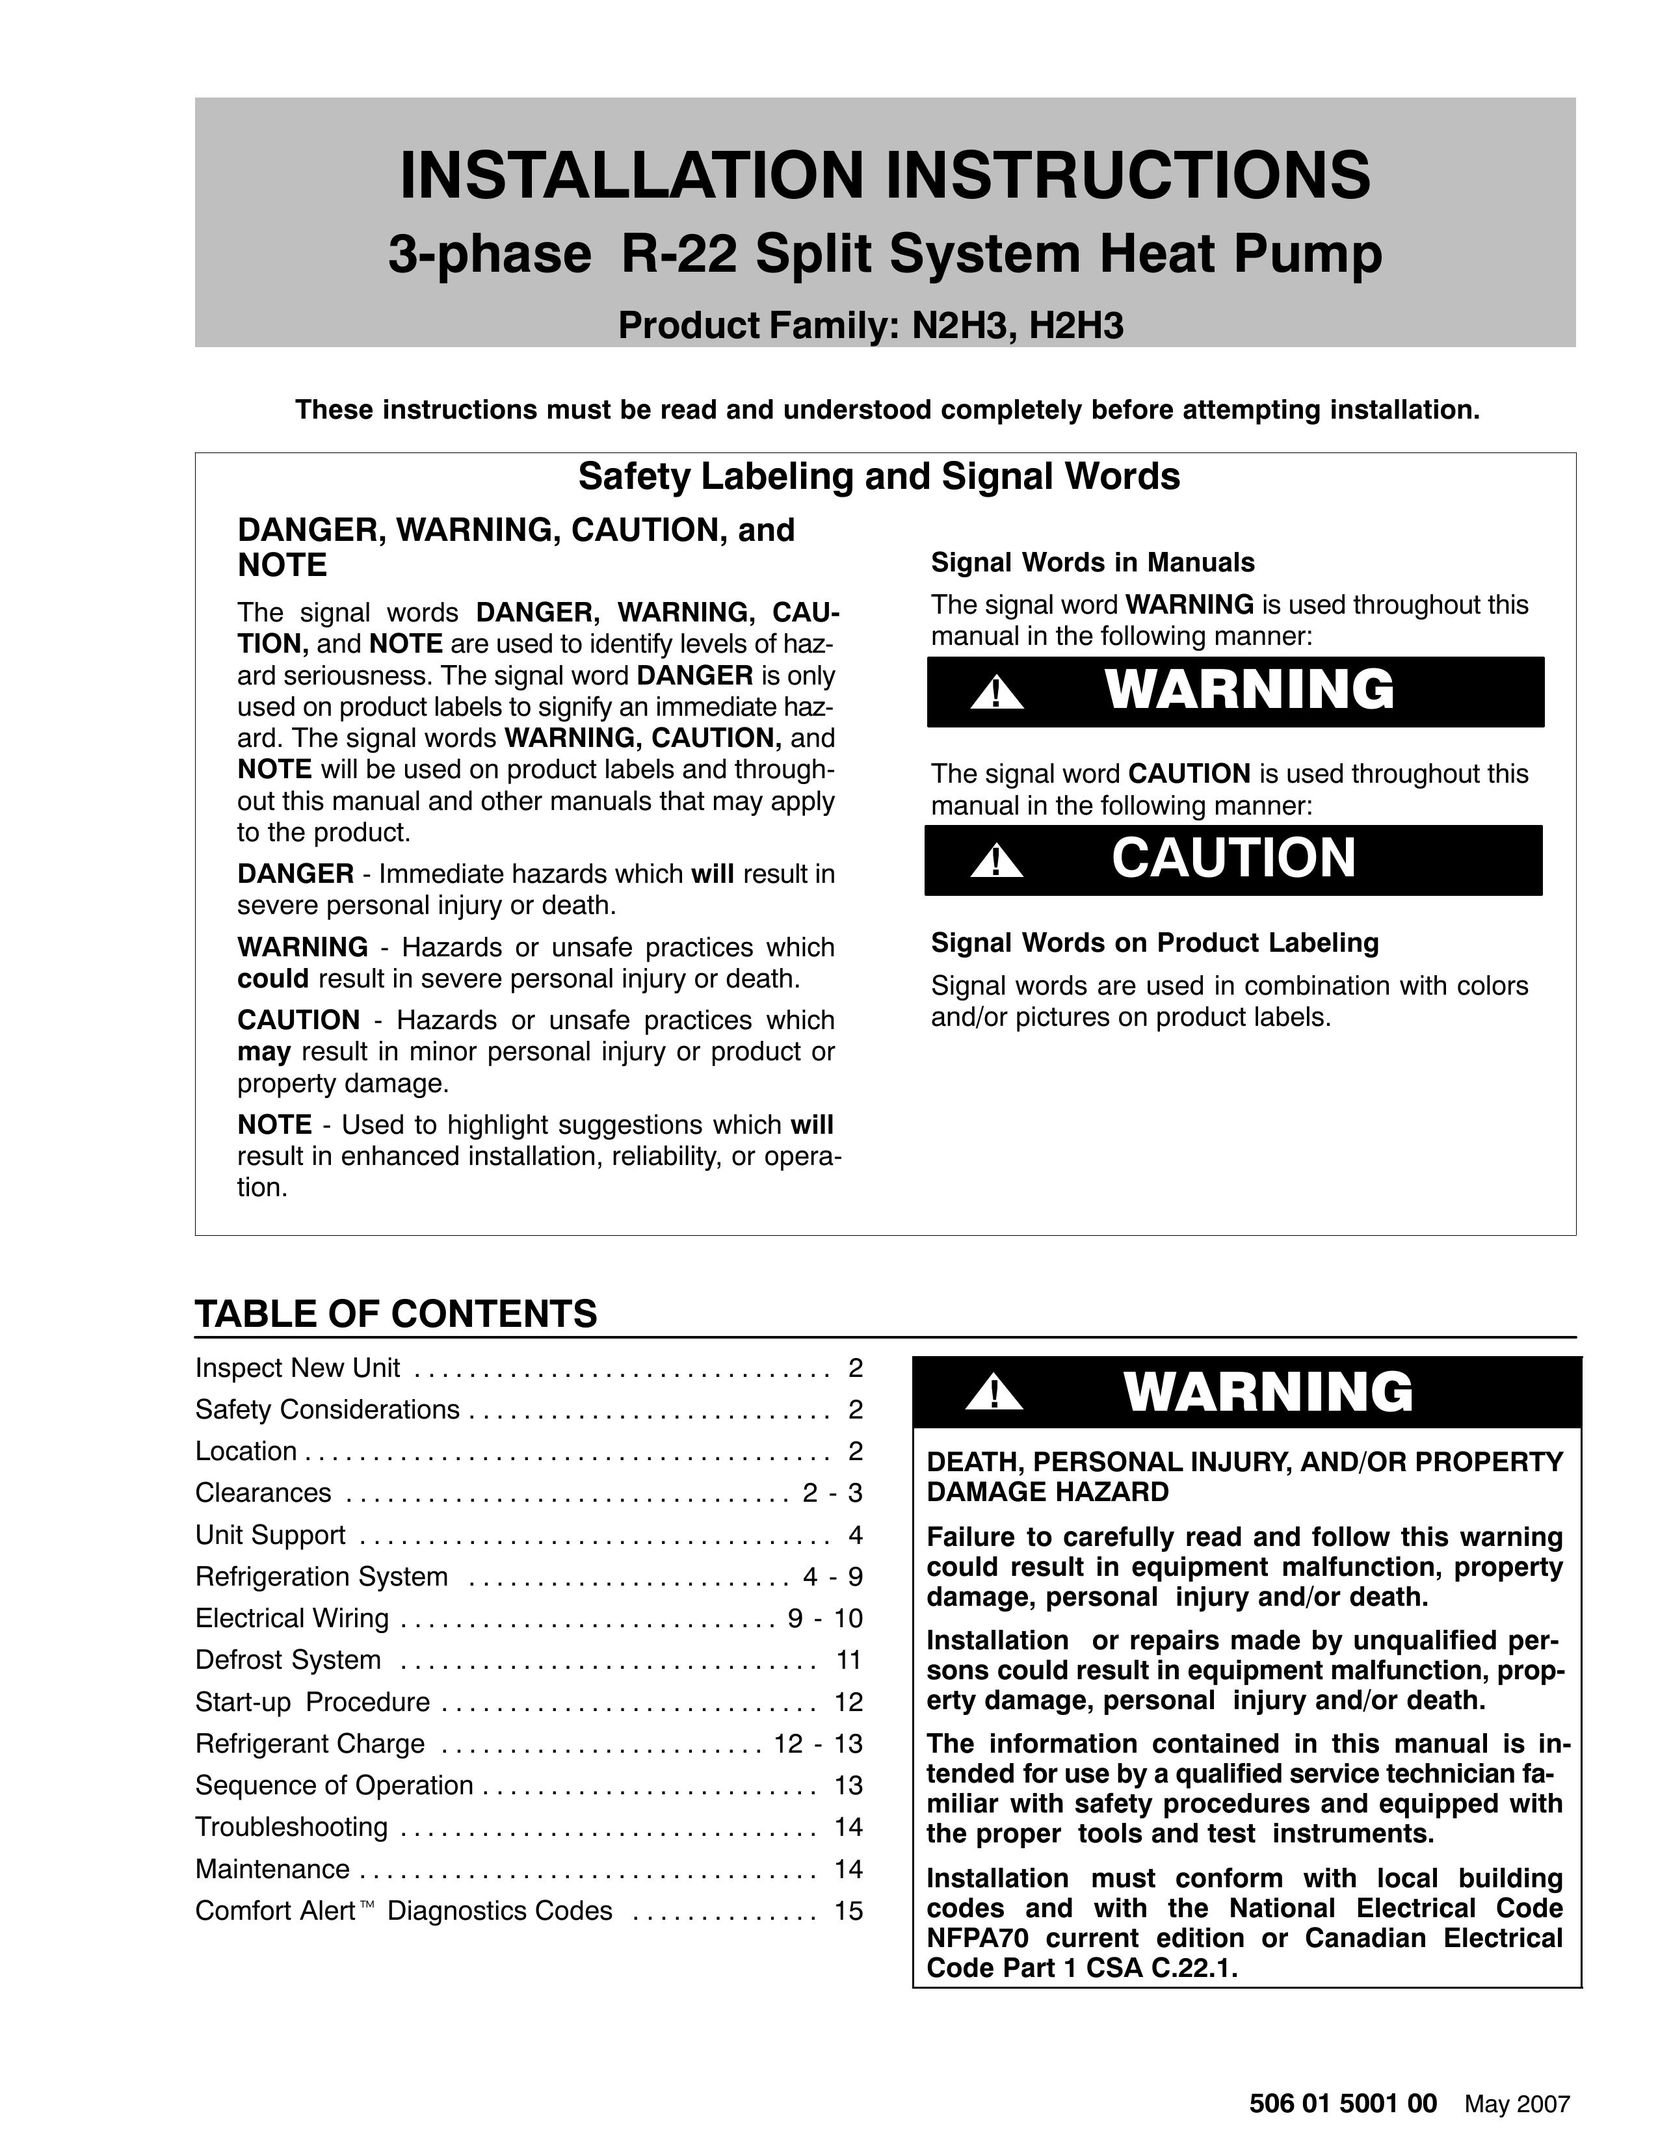 HP (Hewlett-Packard) N2H3 Heat Pump User Manual